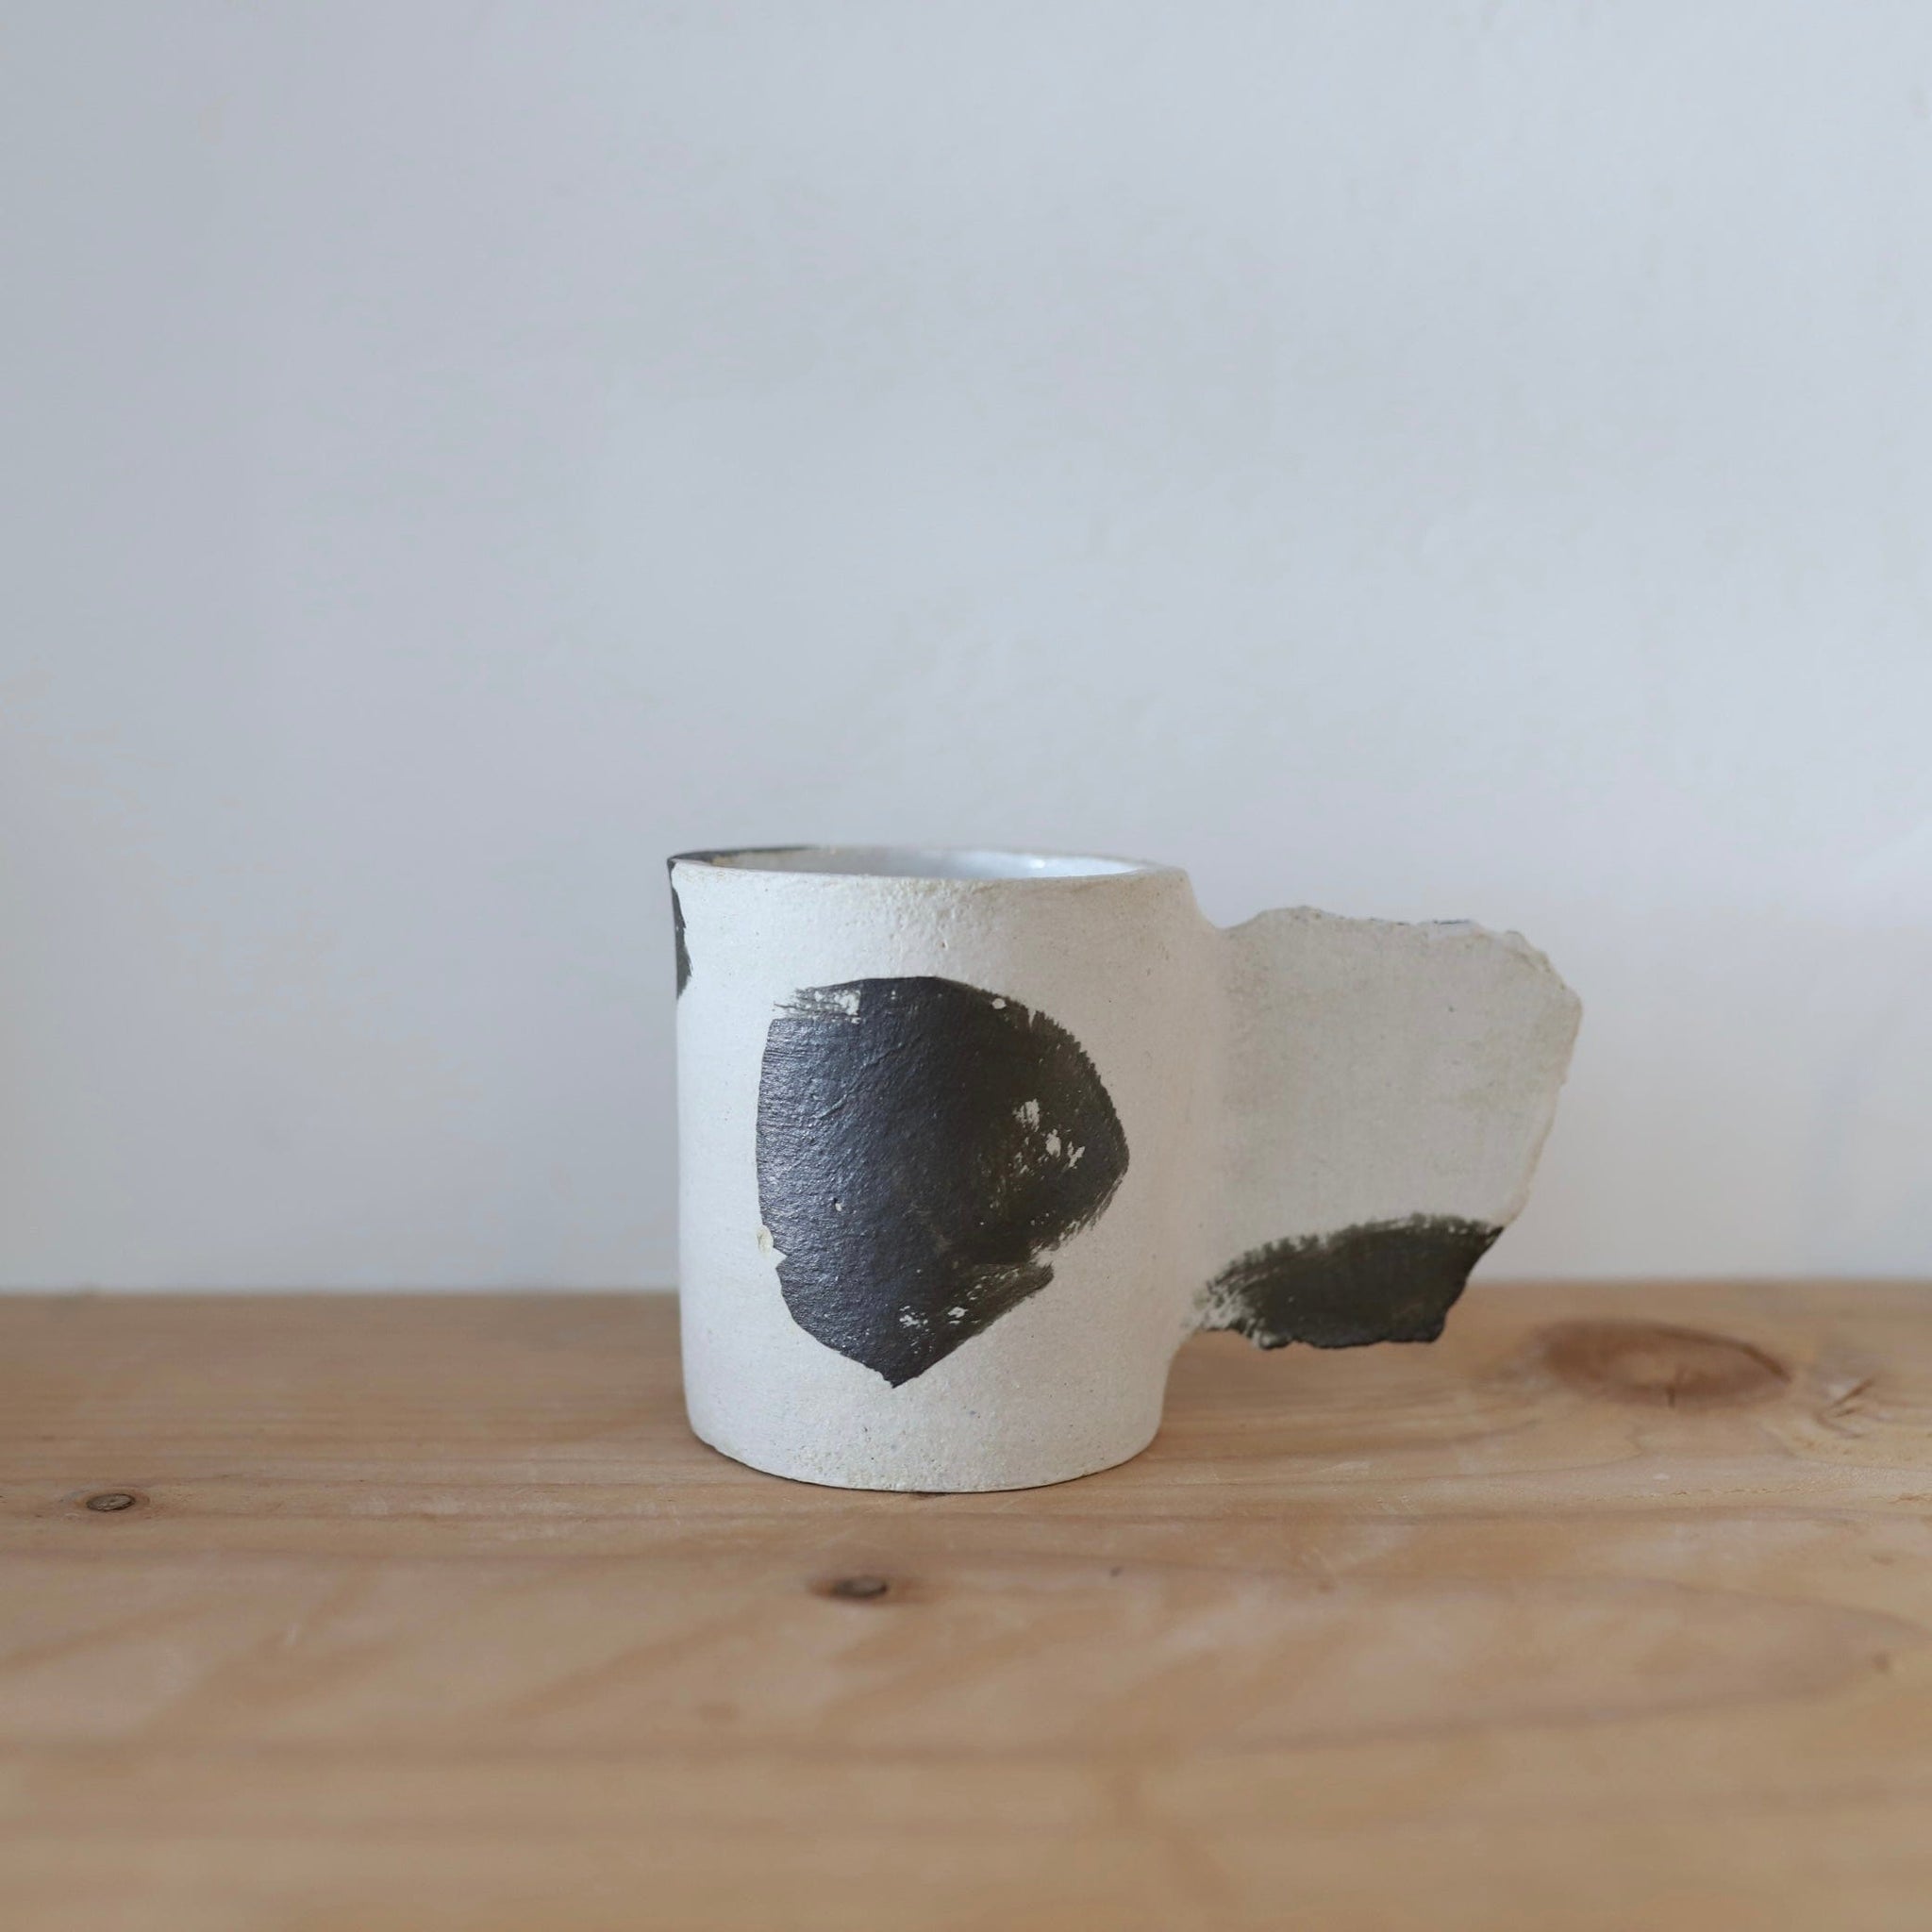 Heyja Do Kitchen B. Hand Sculpted Patterned Ceramic Mugs | Heyja Do